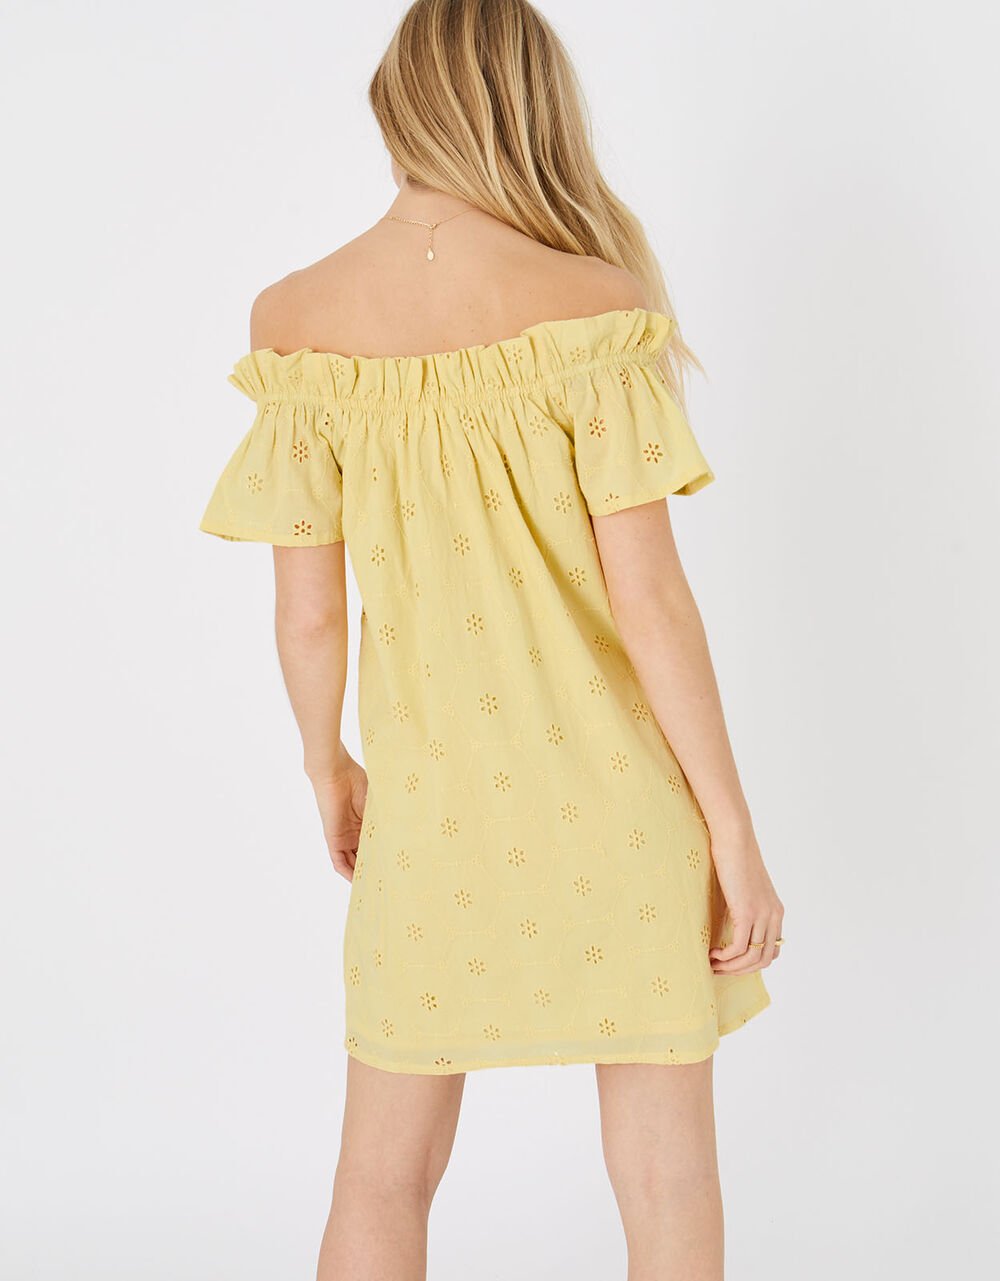 Schiffli Bardot Dress in Organic Cotton Yellow | Beach holiday dresses ...